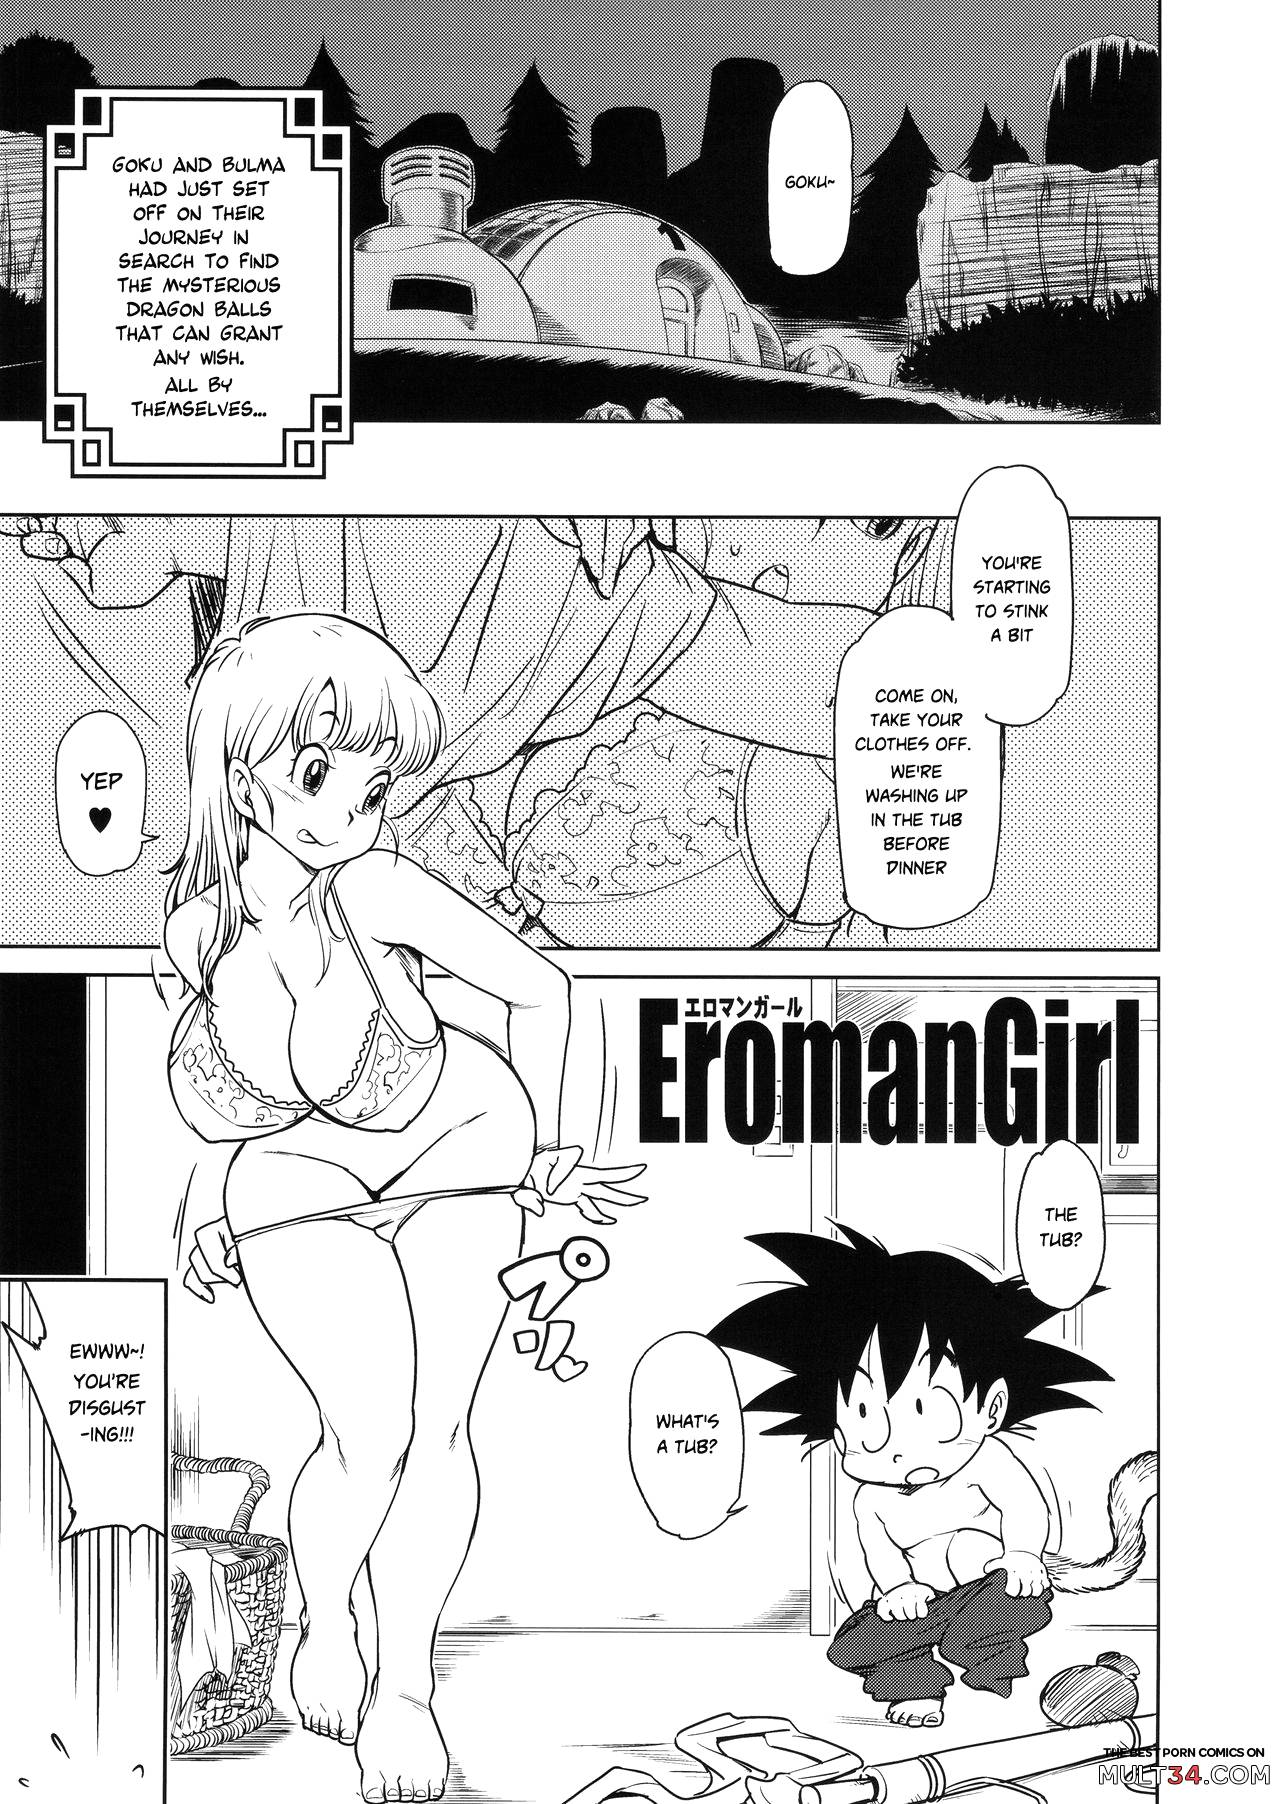 Eromangirl page 2